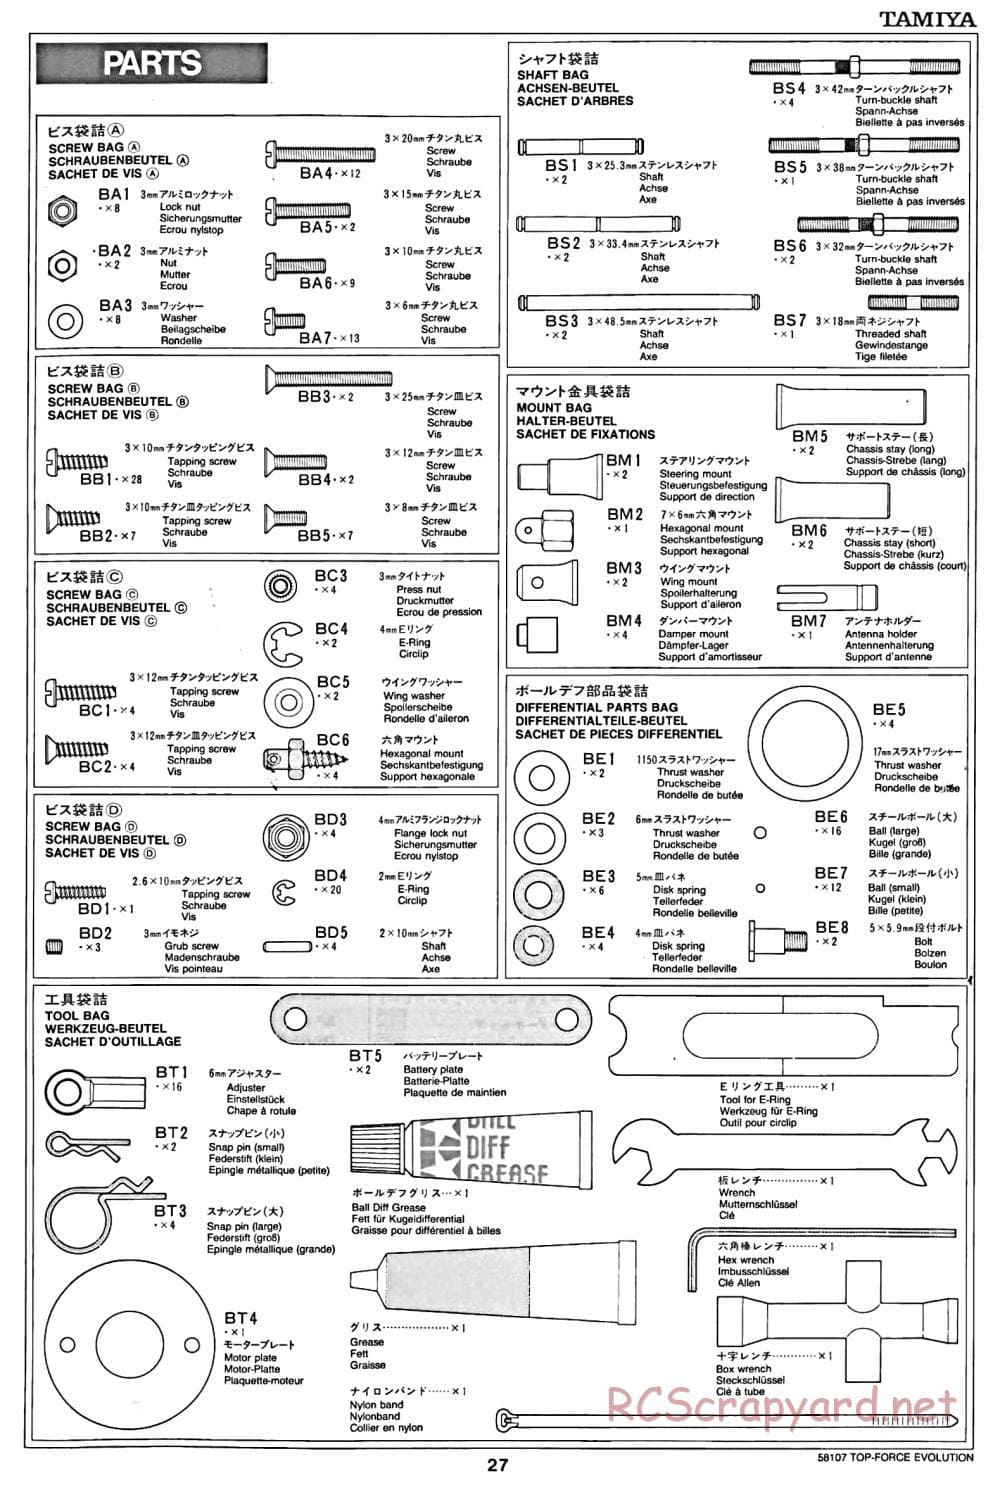 Tamiya - Top Force Evolution Chassis - Manual - Page 27